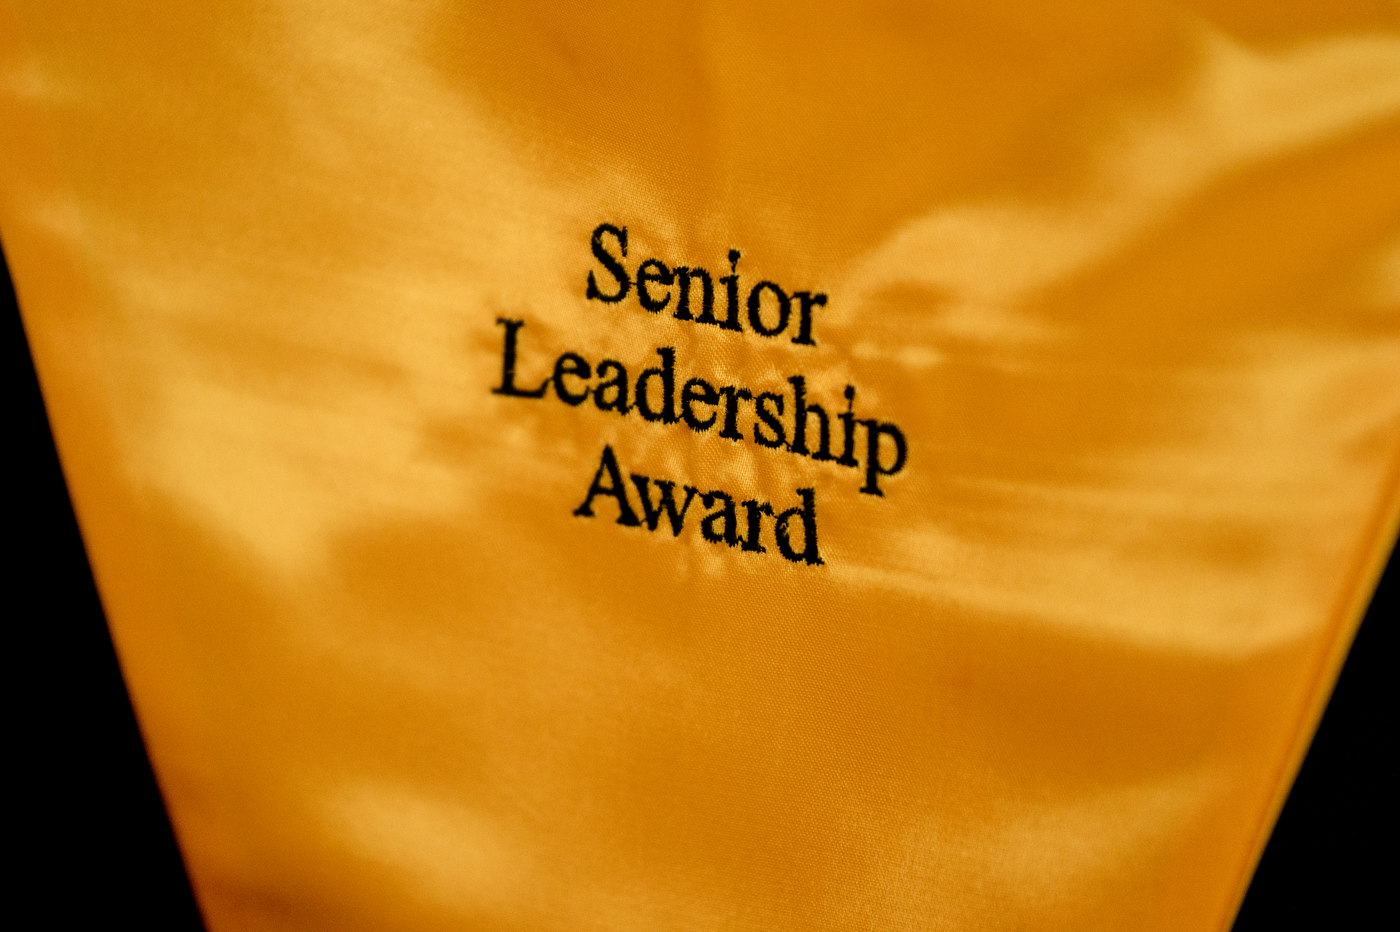 gold sash that has "Senior Leadership Award" embroidered on it